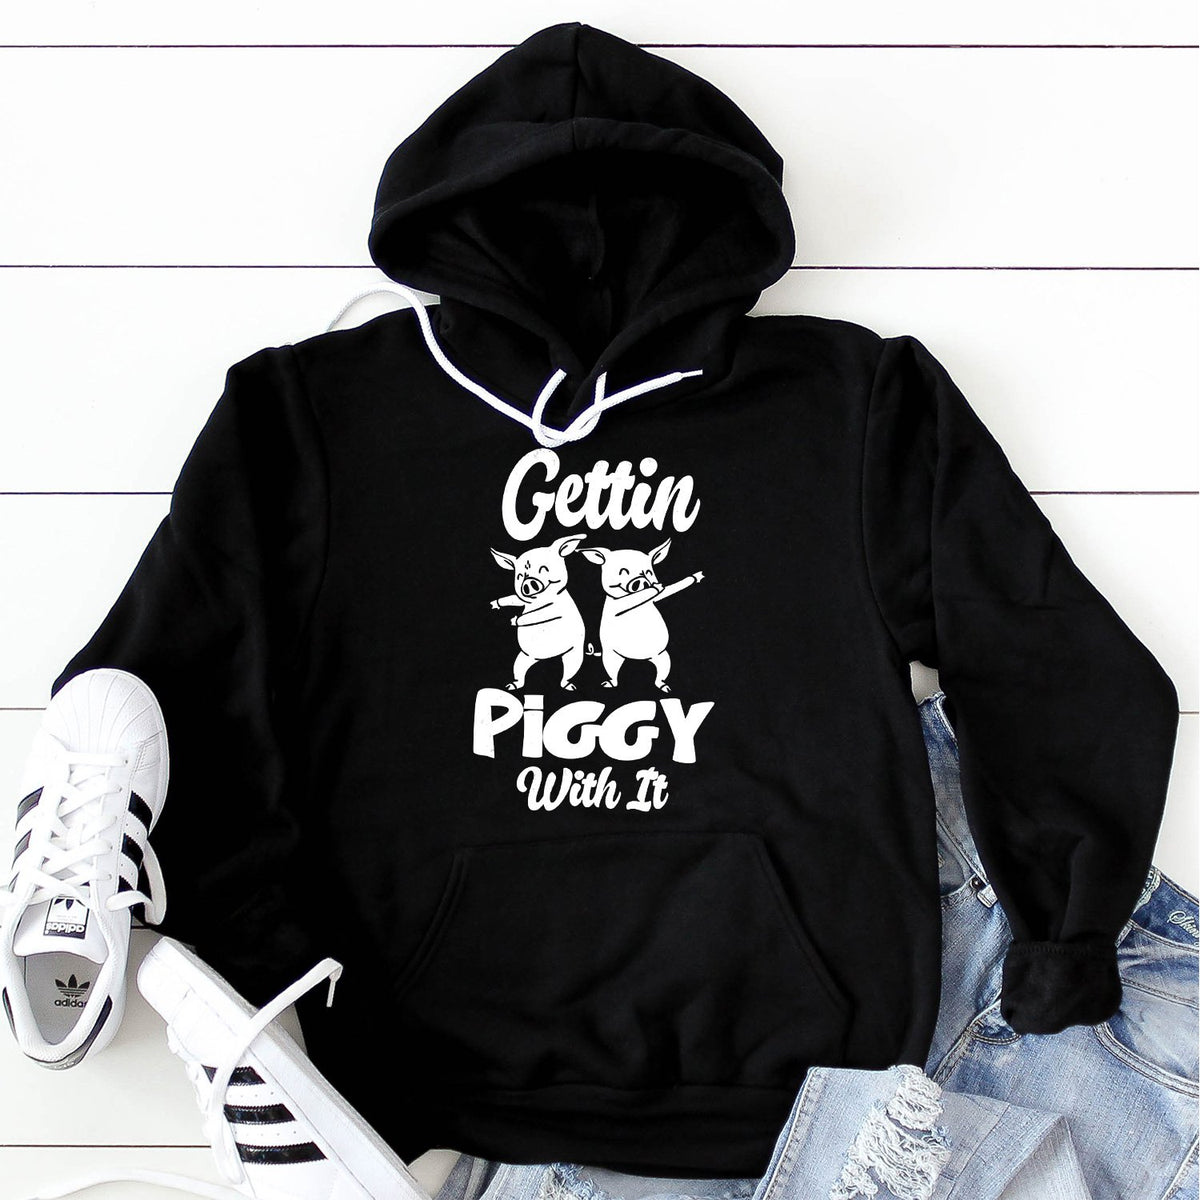 Gettin Piggy With It - Hoodie Sweatshirt